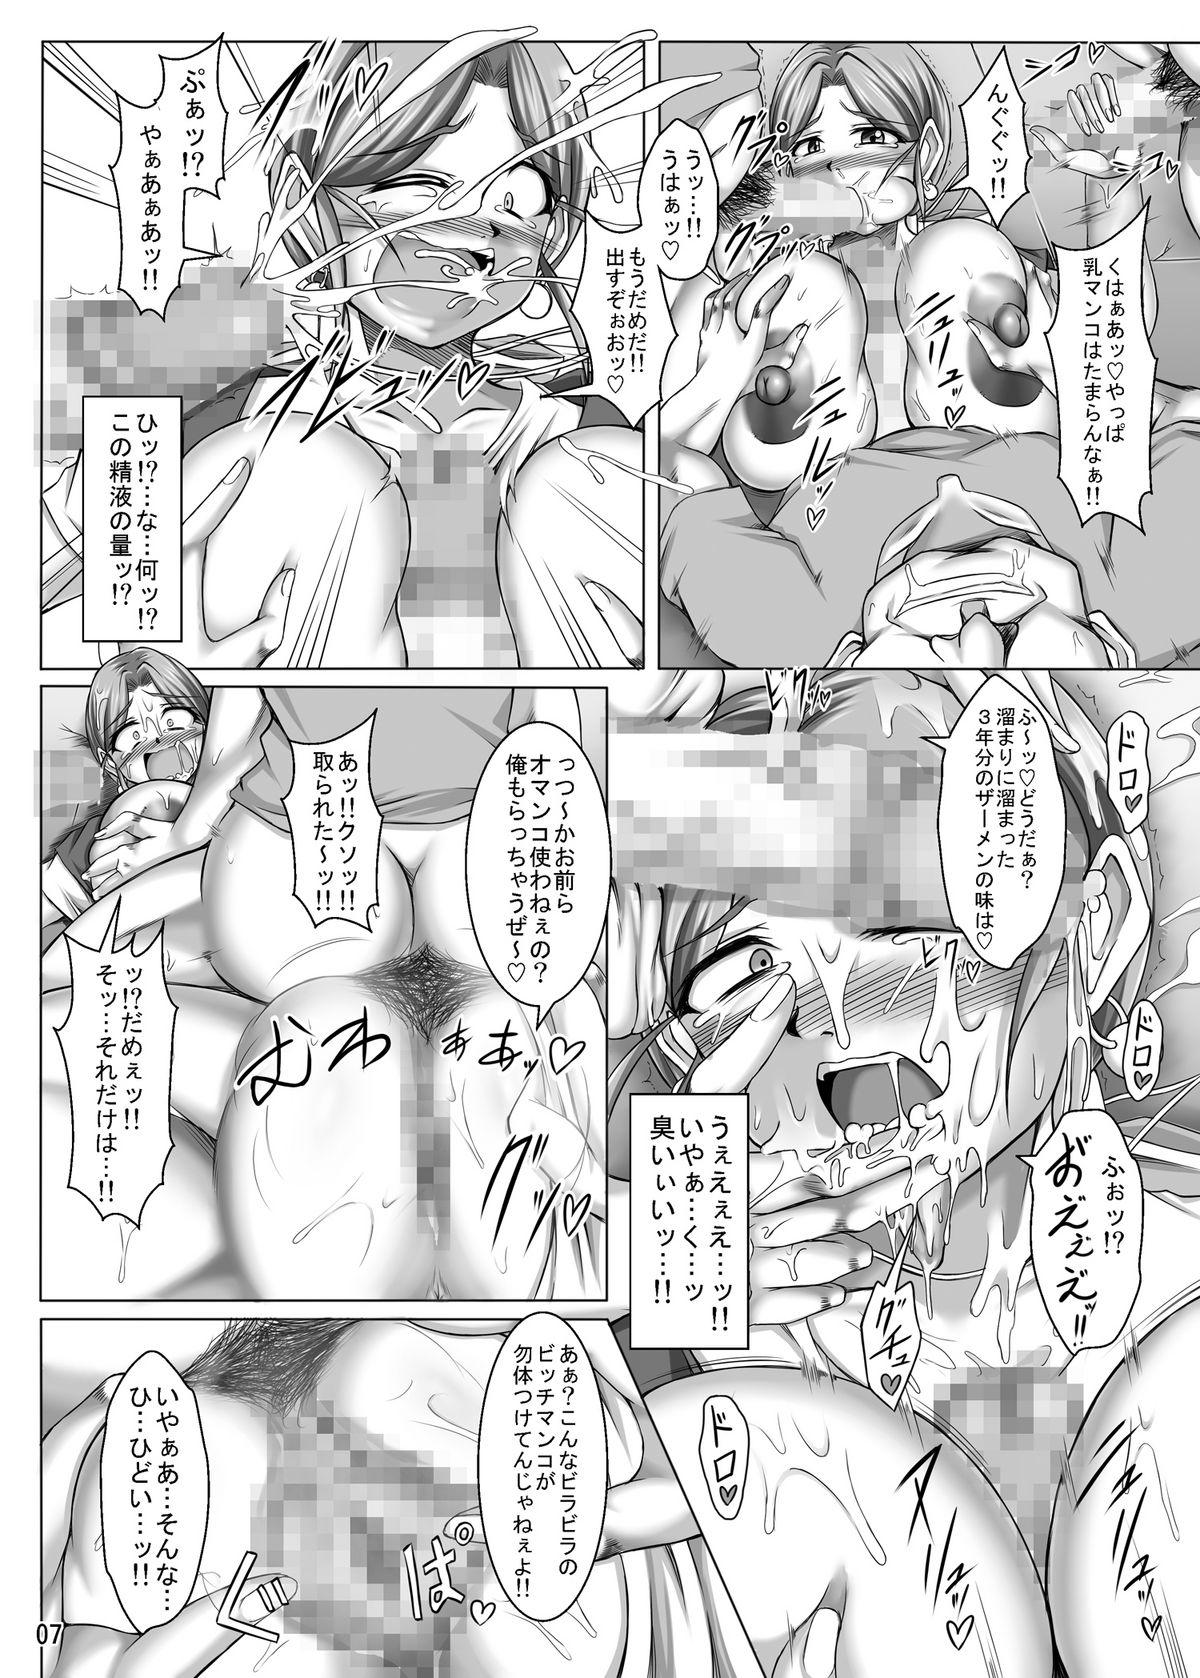 Buttplug Toruneko Fujin Nene 37 Dannani himitsu no rougoku sontsukuri - Dragon quest iv Blowjobs - Page 7